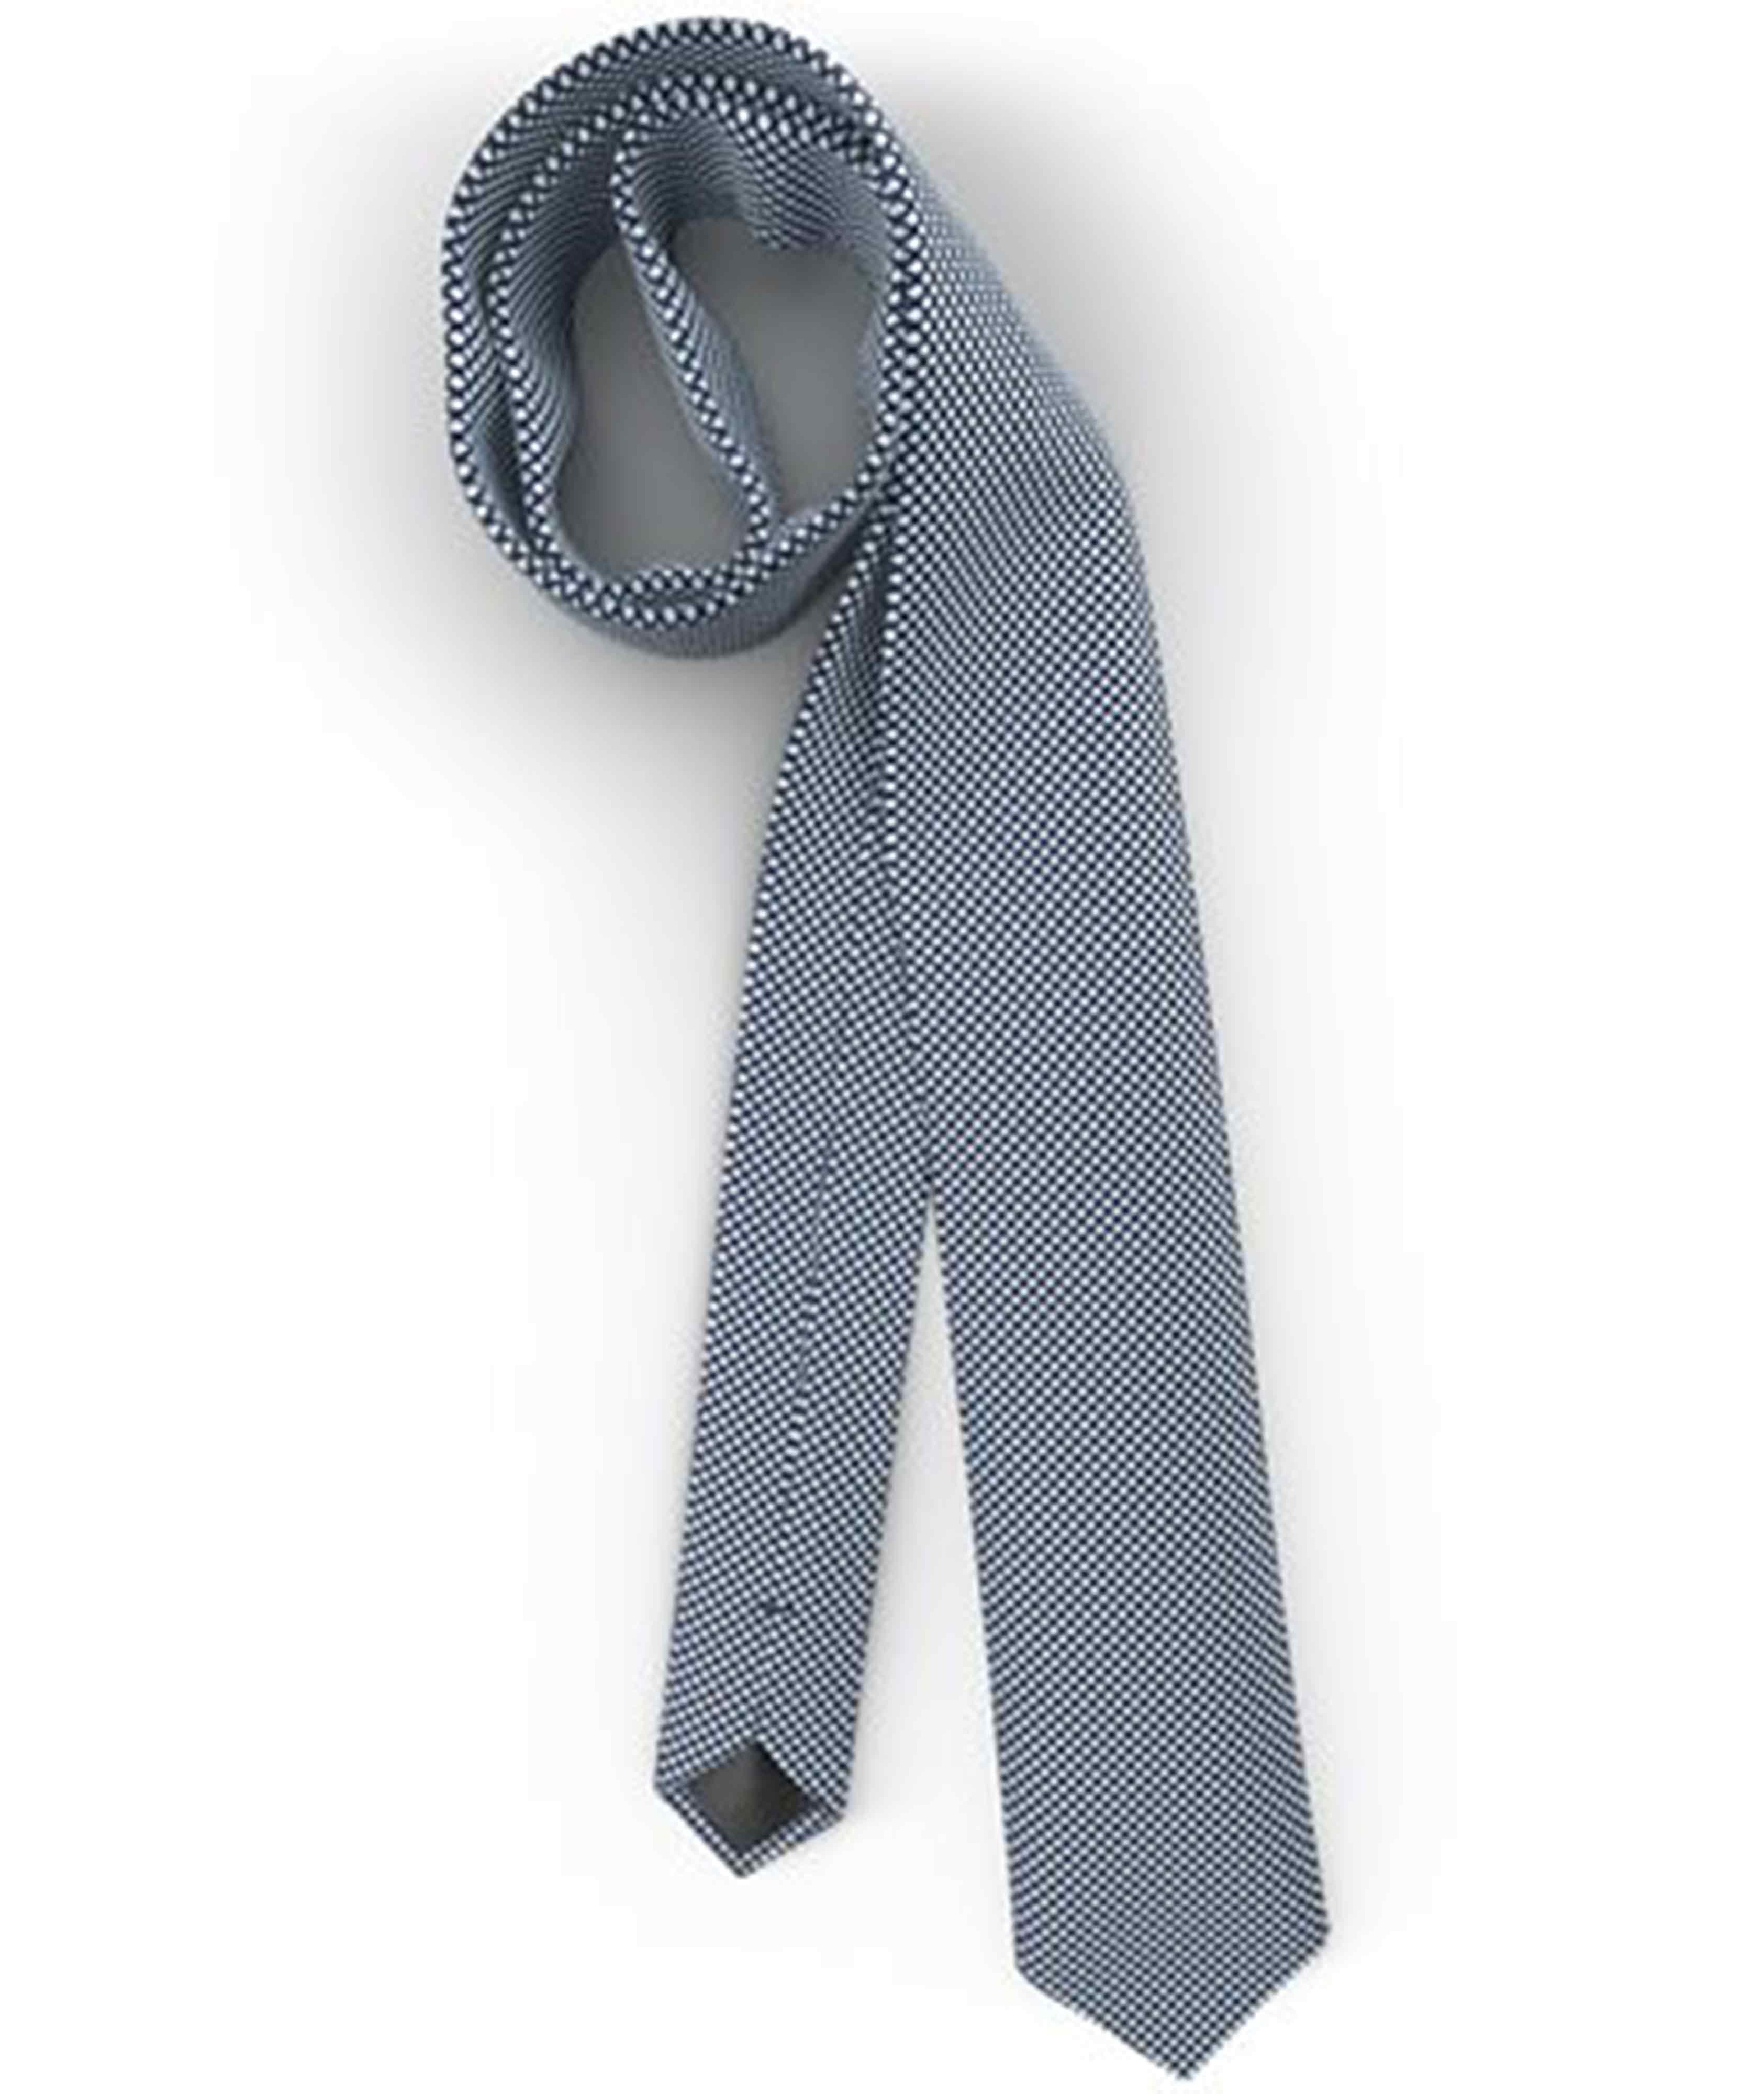 Cravate imprimée image 0